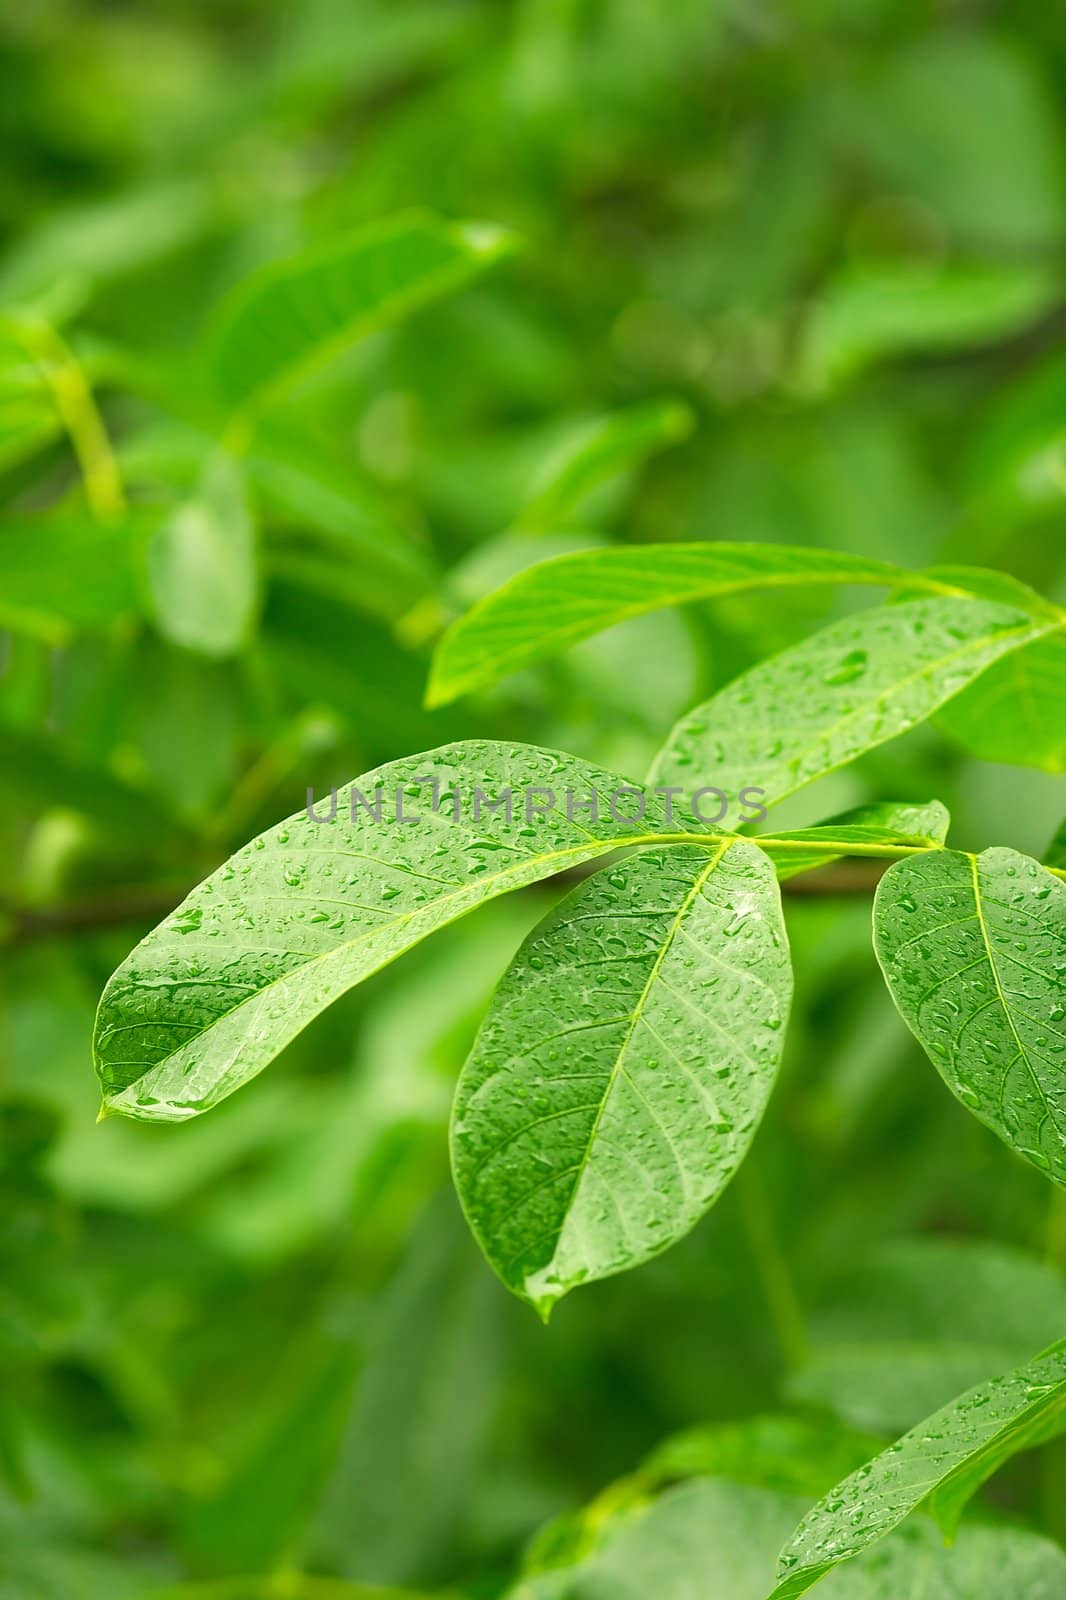 Wet leaves by Gudella